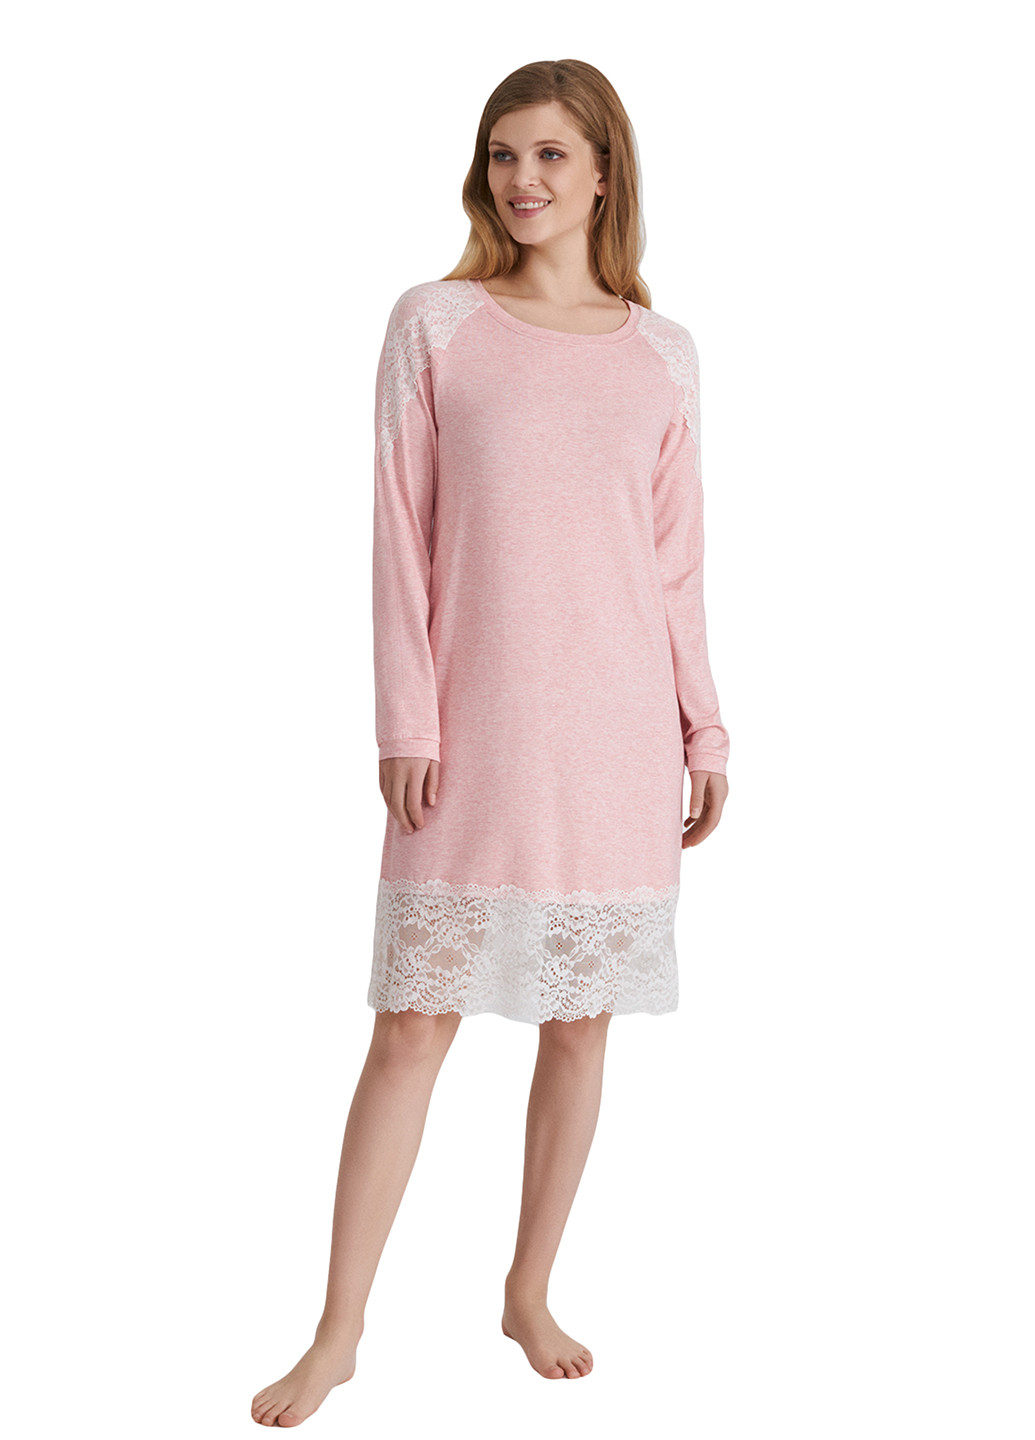 Ночная рубашка Ellen меланж светло-розовая домашняя трикотаж, модал